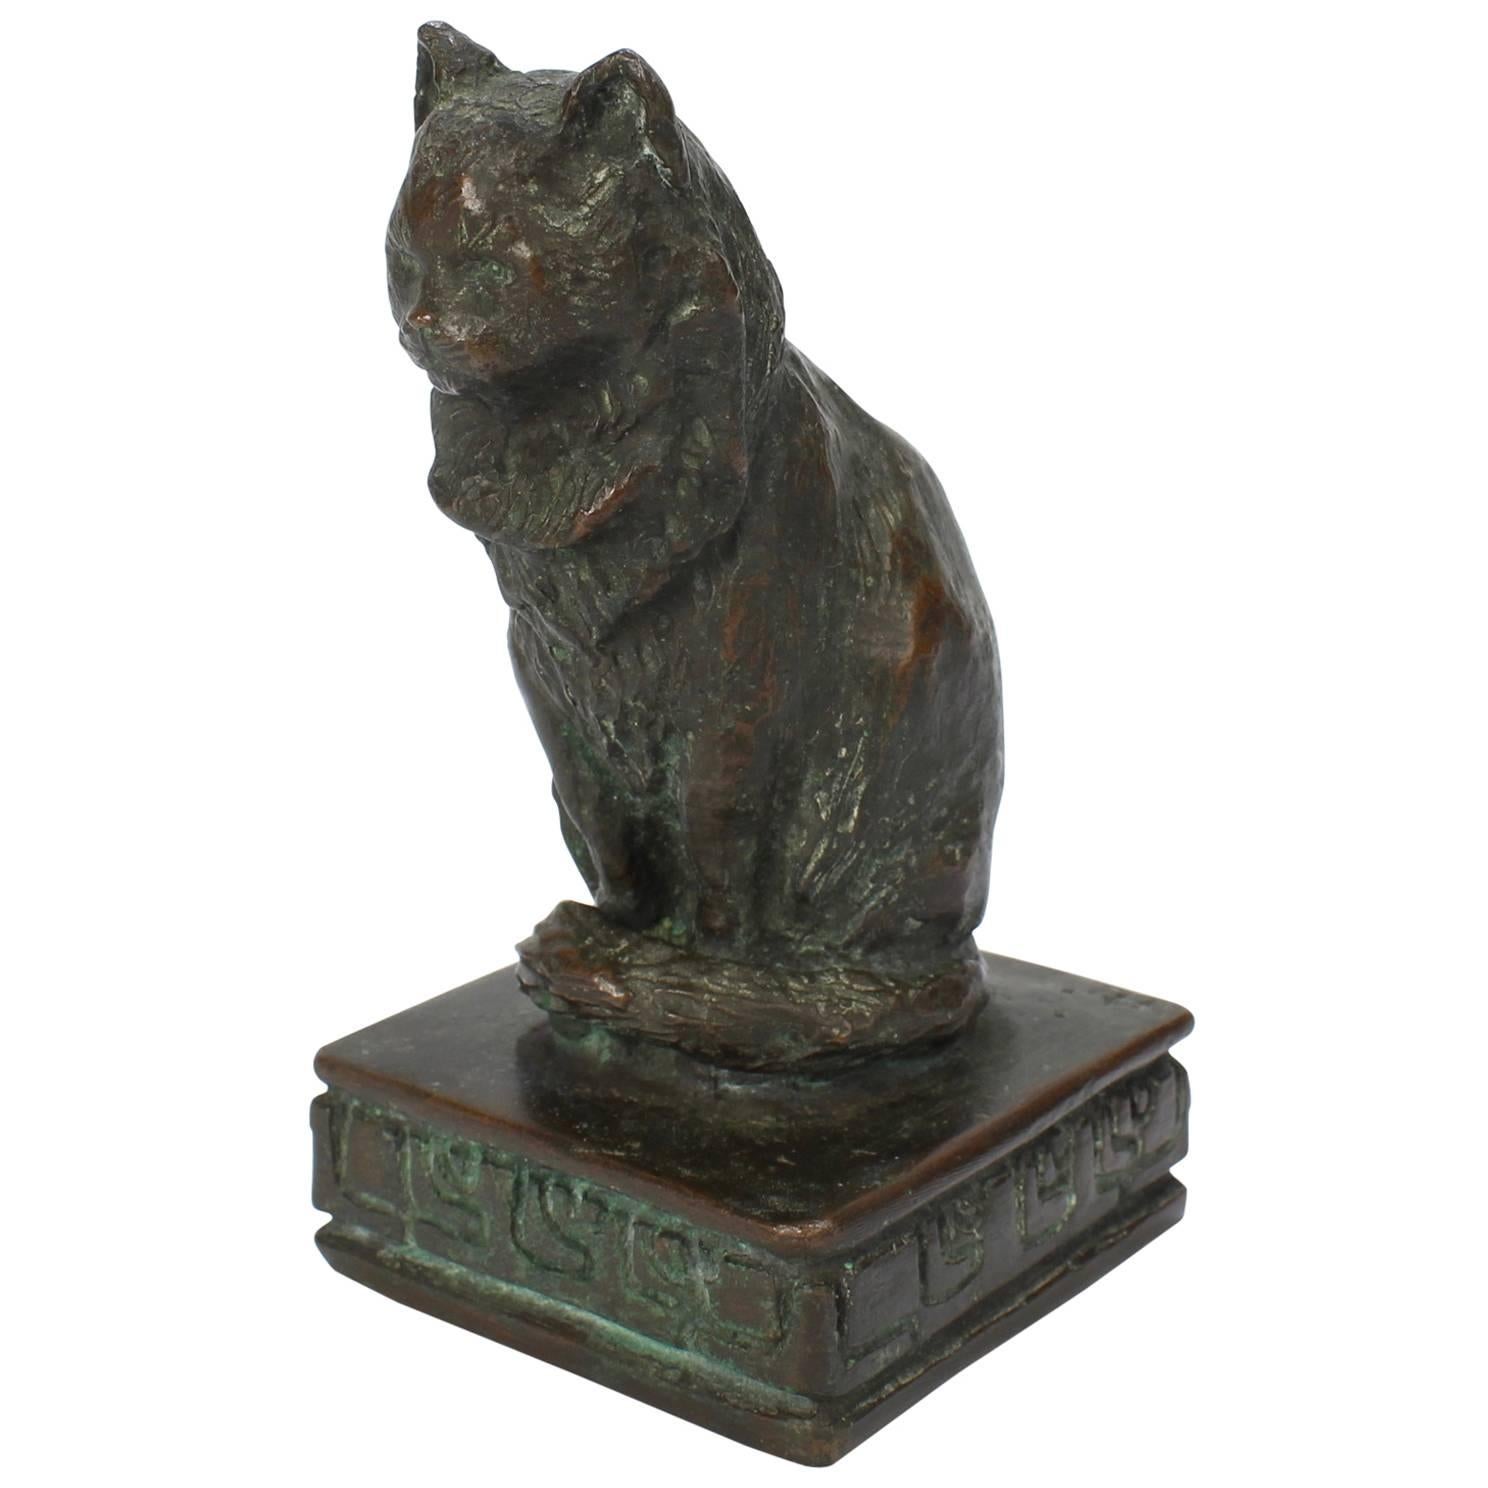  A Bronze Sculpture of a Persian Cat by American Sculptor Ruth Walker Brooks